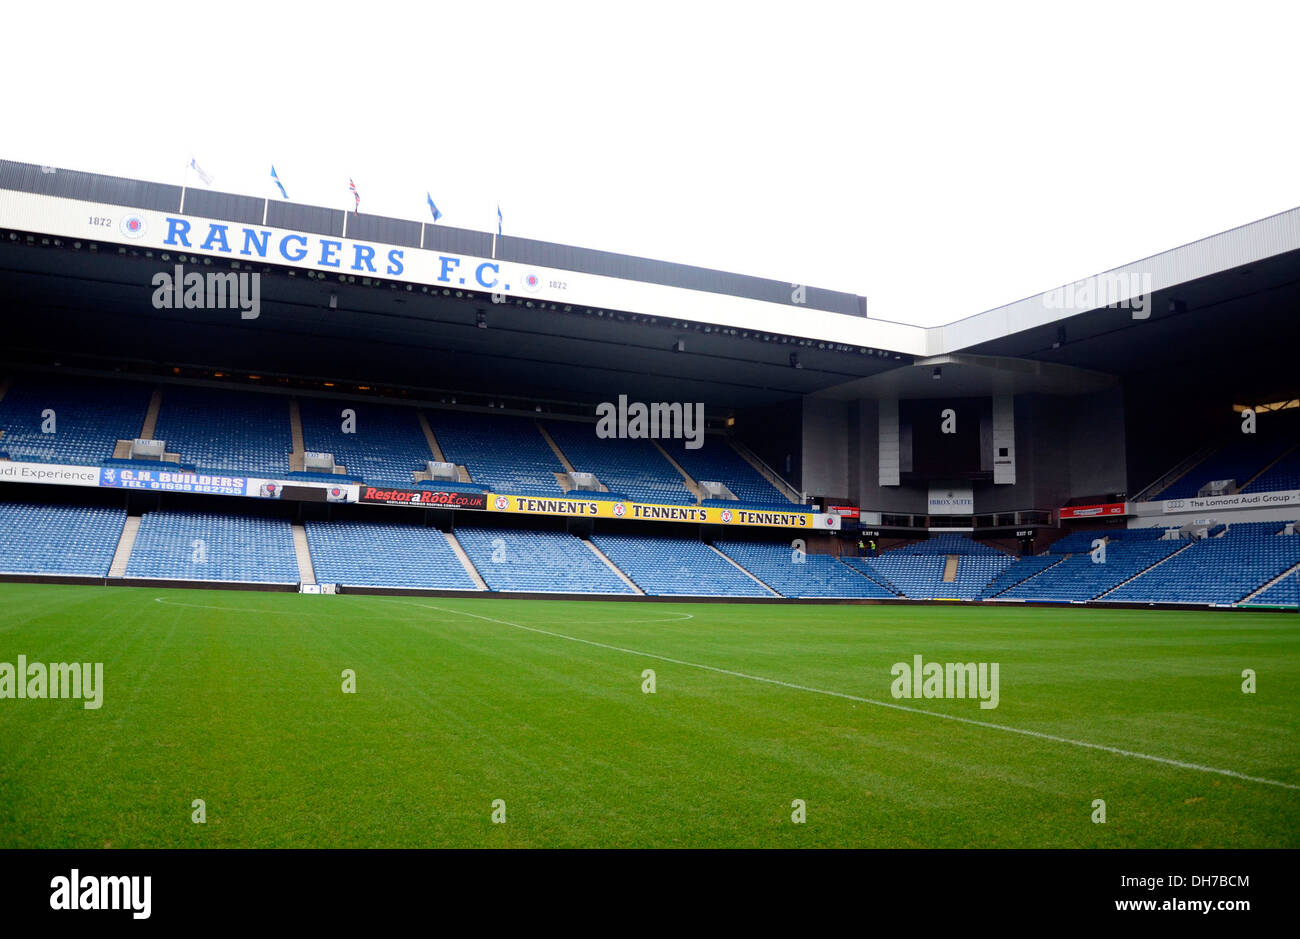 Rangers Football Club - Ibrox Stadium Glasgow, Scotland - 16.03.12 Stock Photo